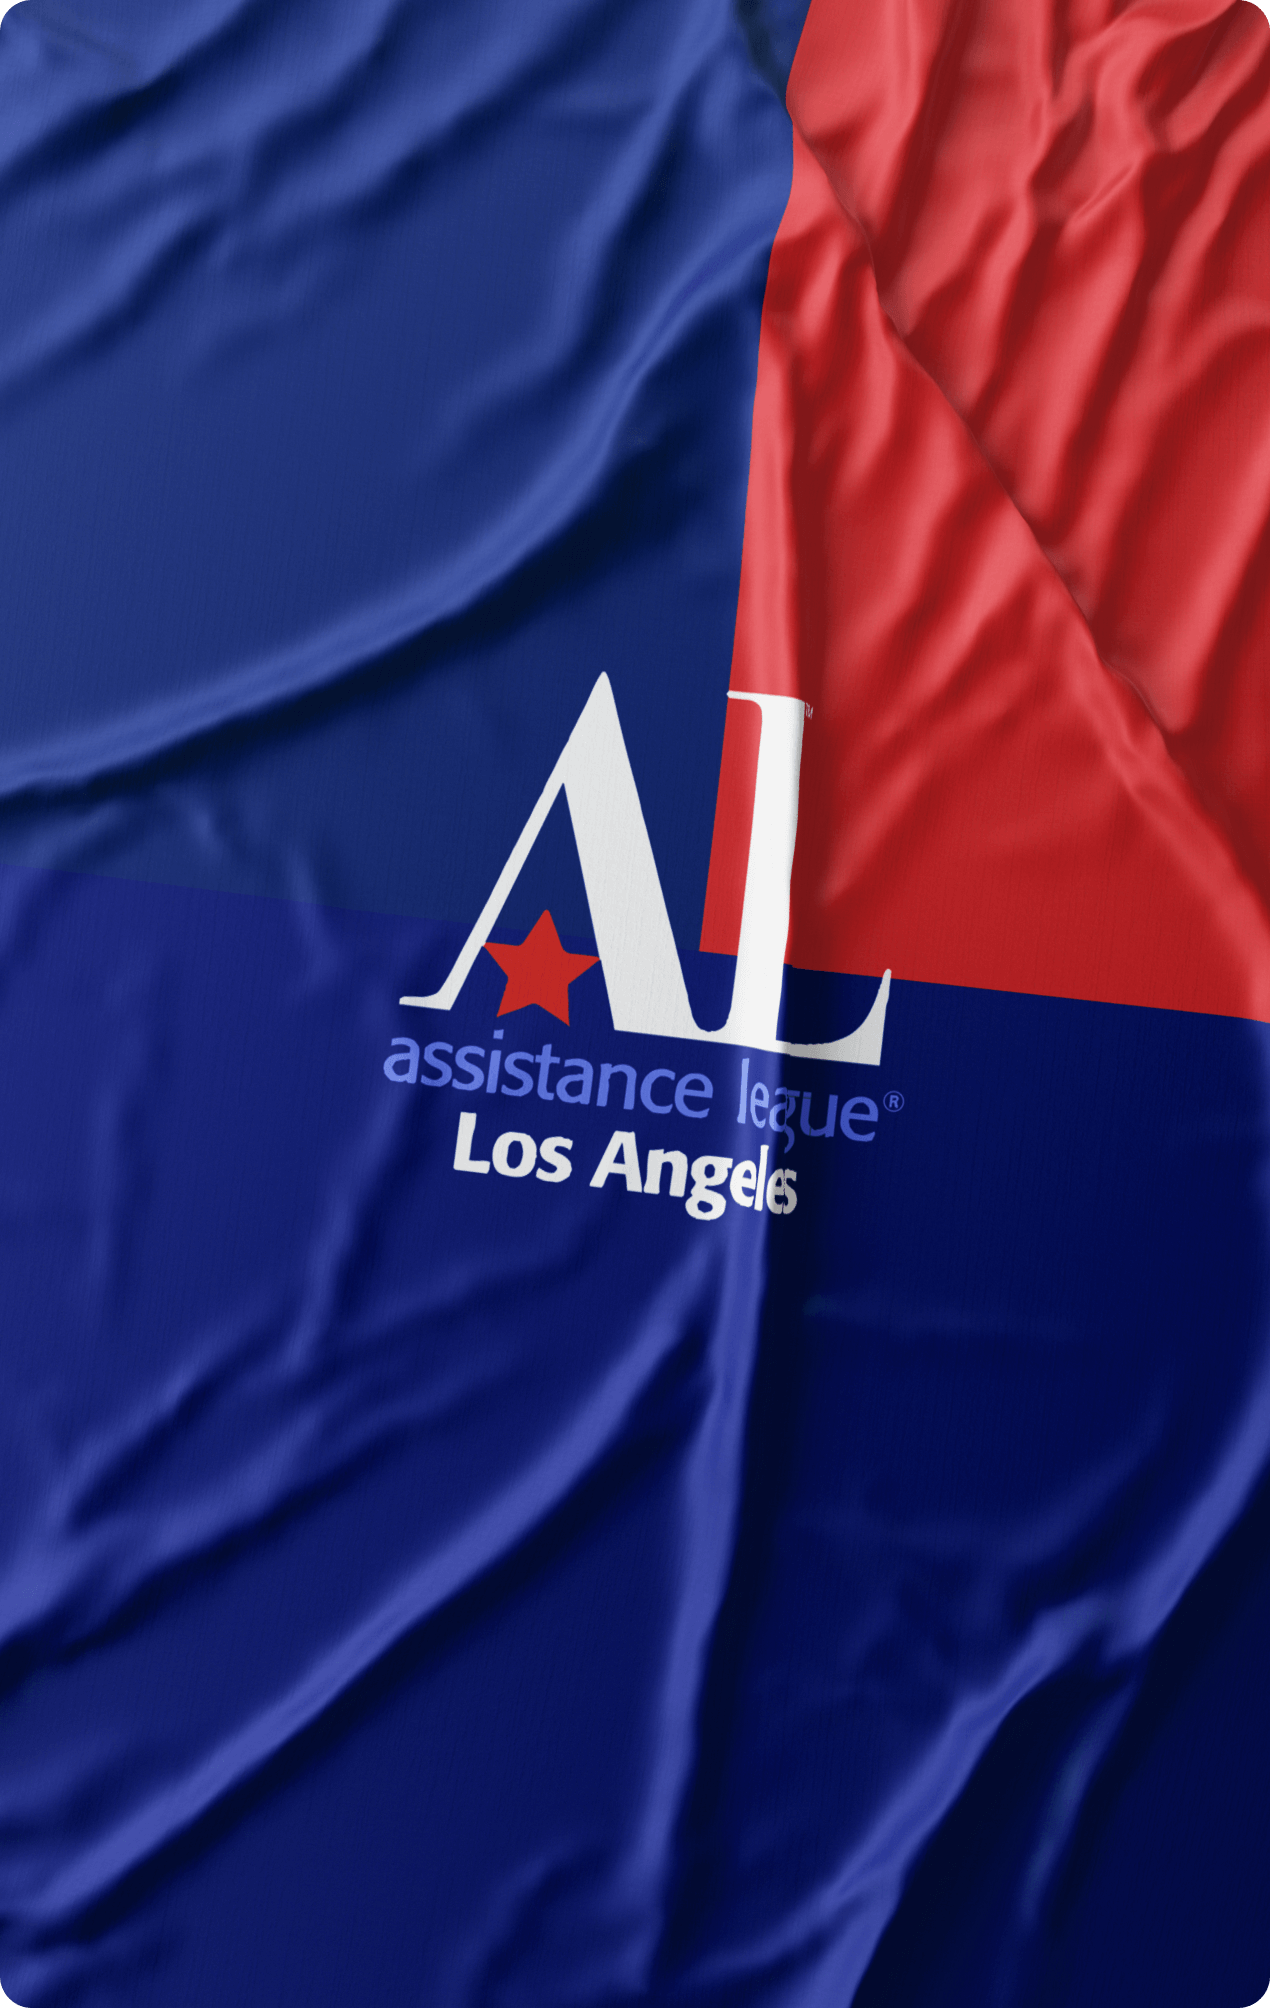 Member Portal The Assistance League of Los Angeles